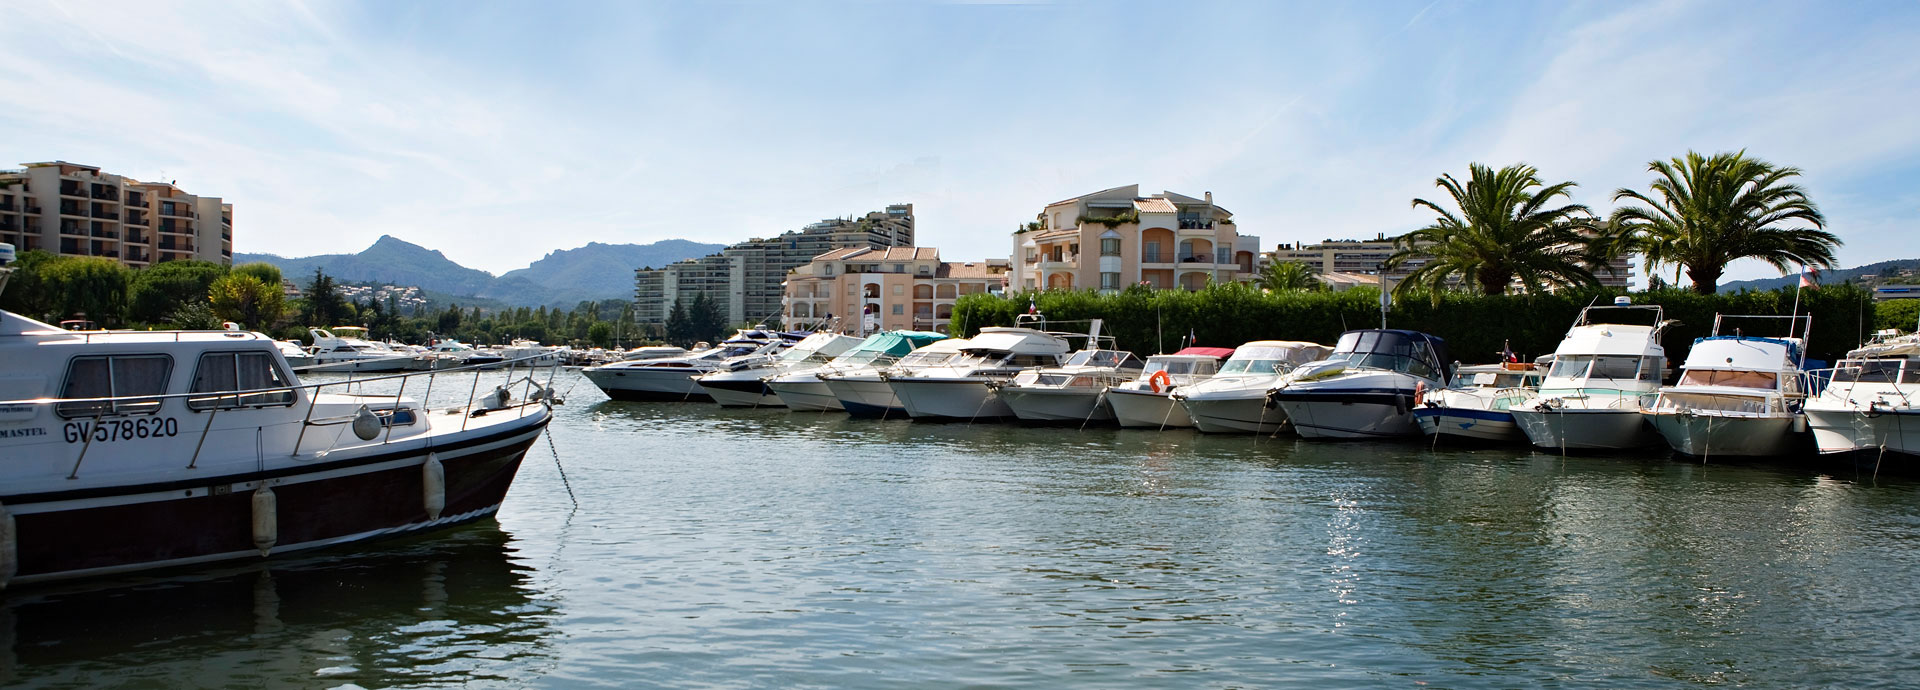 Cannes-Mandelieu la Napoule aan de Côte d'Azur: vakantie boeken in Alpes-Maritimes